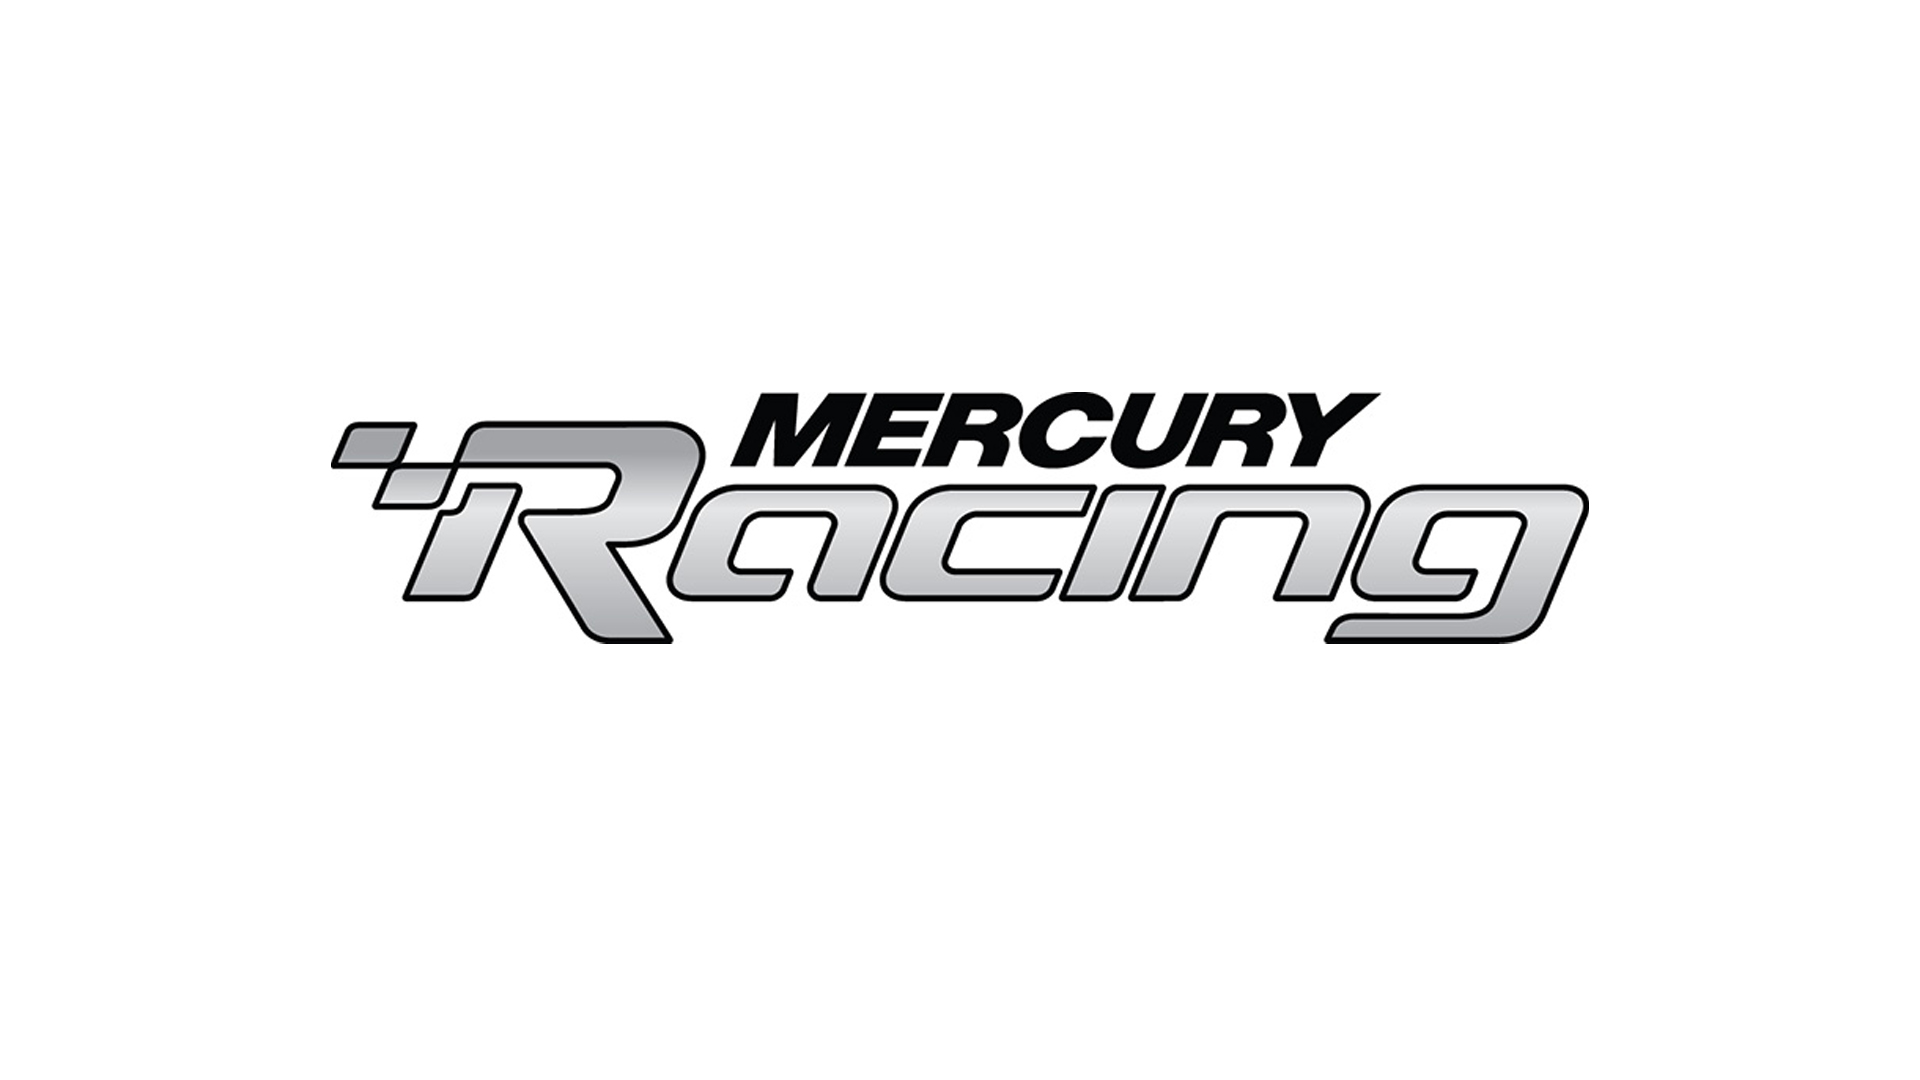 Mercury-Logo